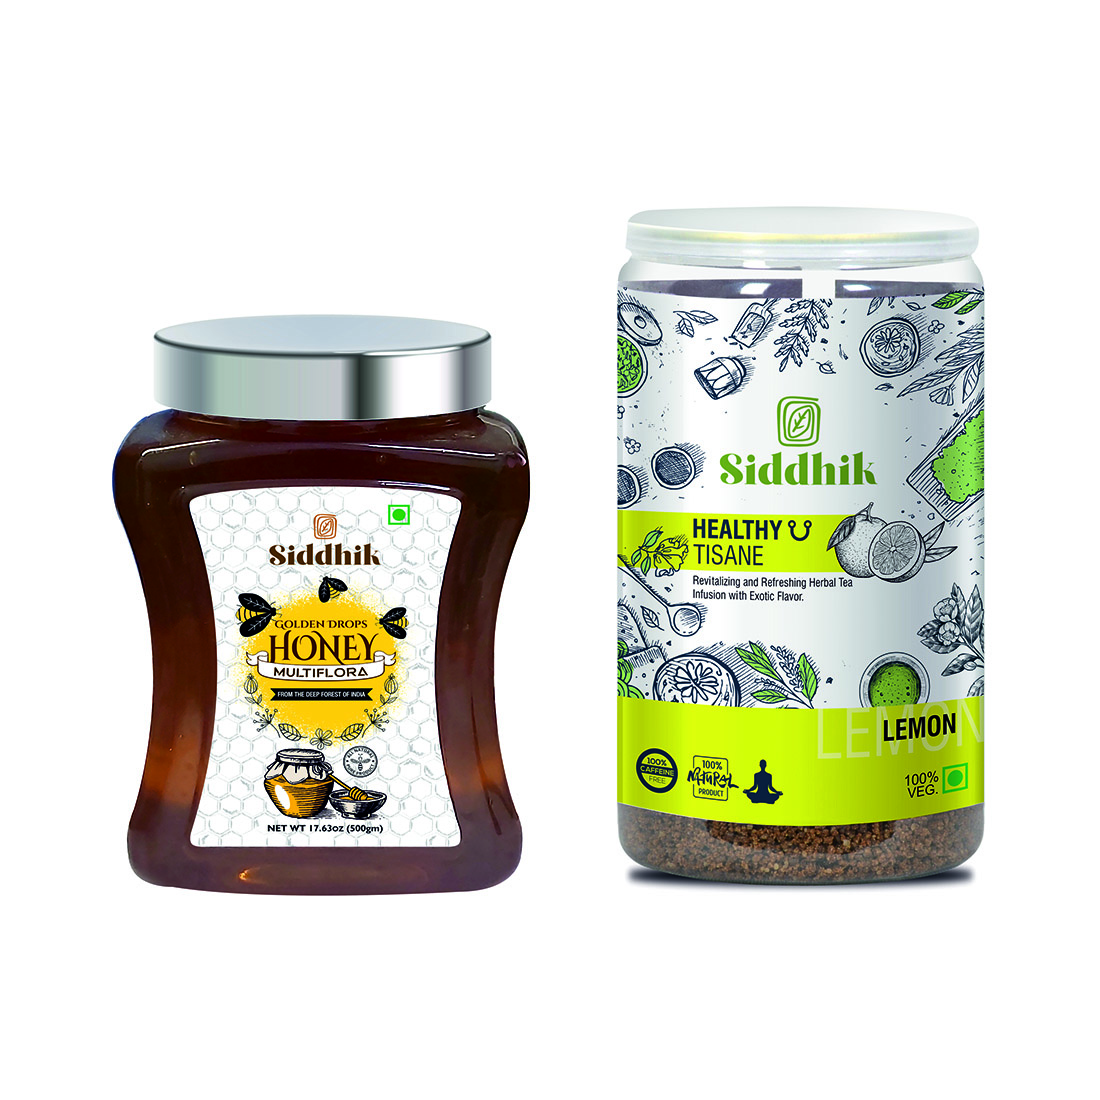 Siddhik Golden Drops Multiflora Honey 500 grams with Healthy U Tisane Lemon Tea Revitallizing and Refreshing Herbal Tea Infusion 250 grams